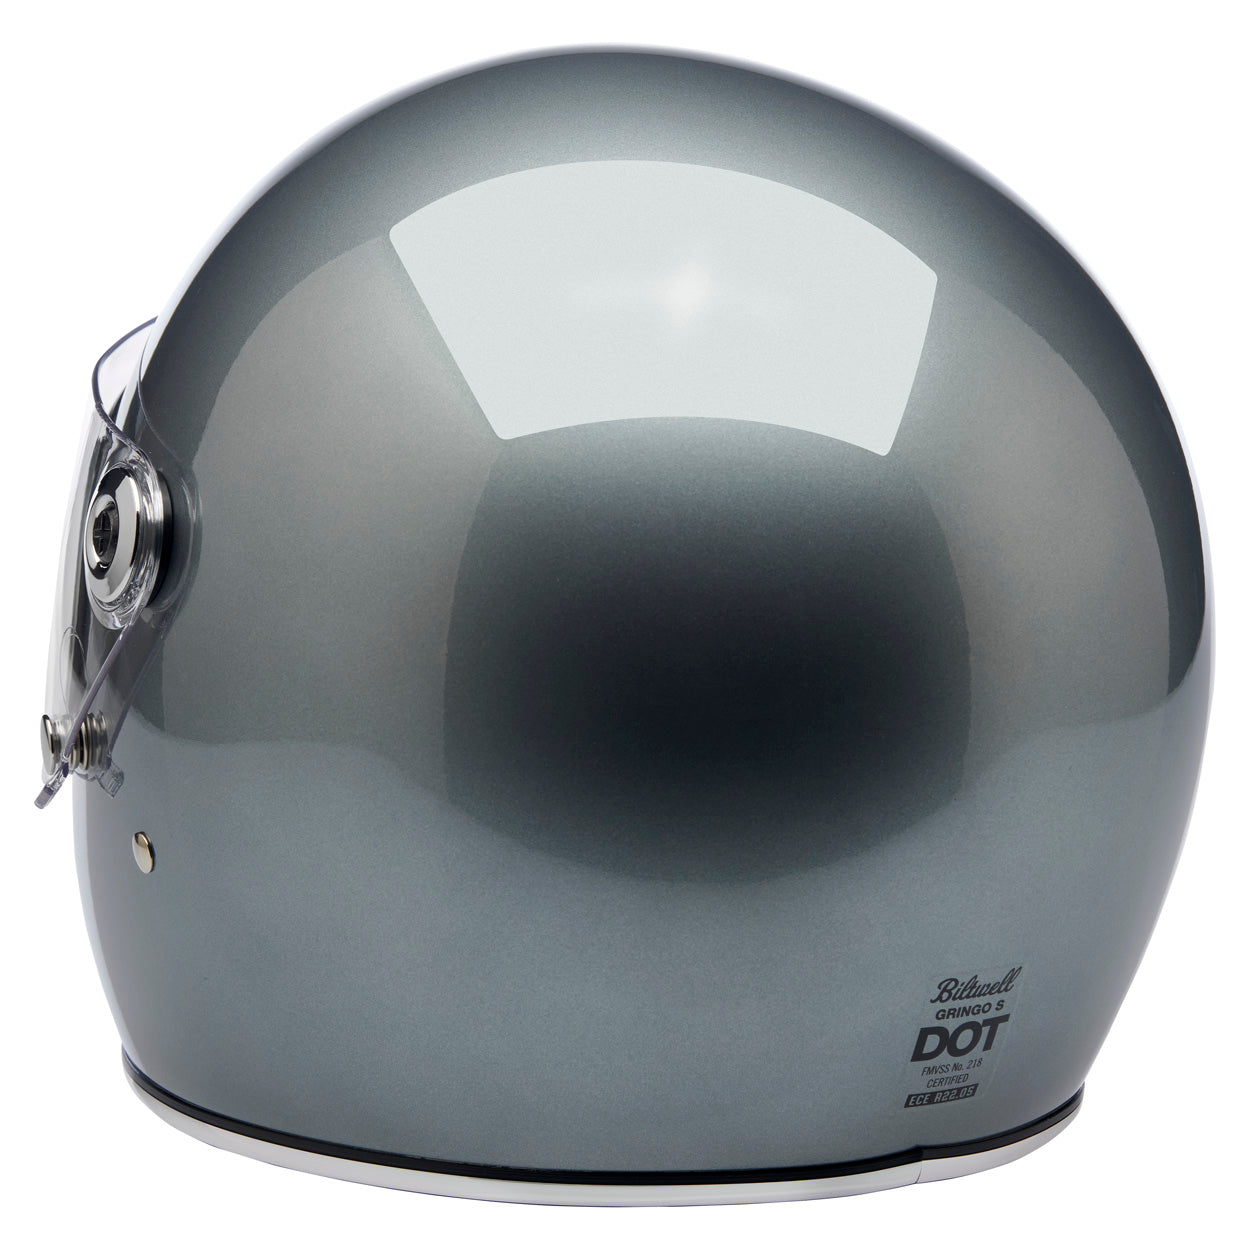 CLOSEOUT Gringo S ECE R22.05 Helmet - Metallic Sterling